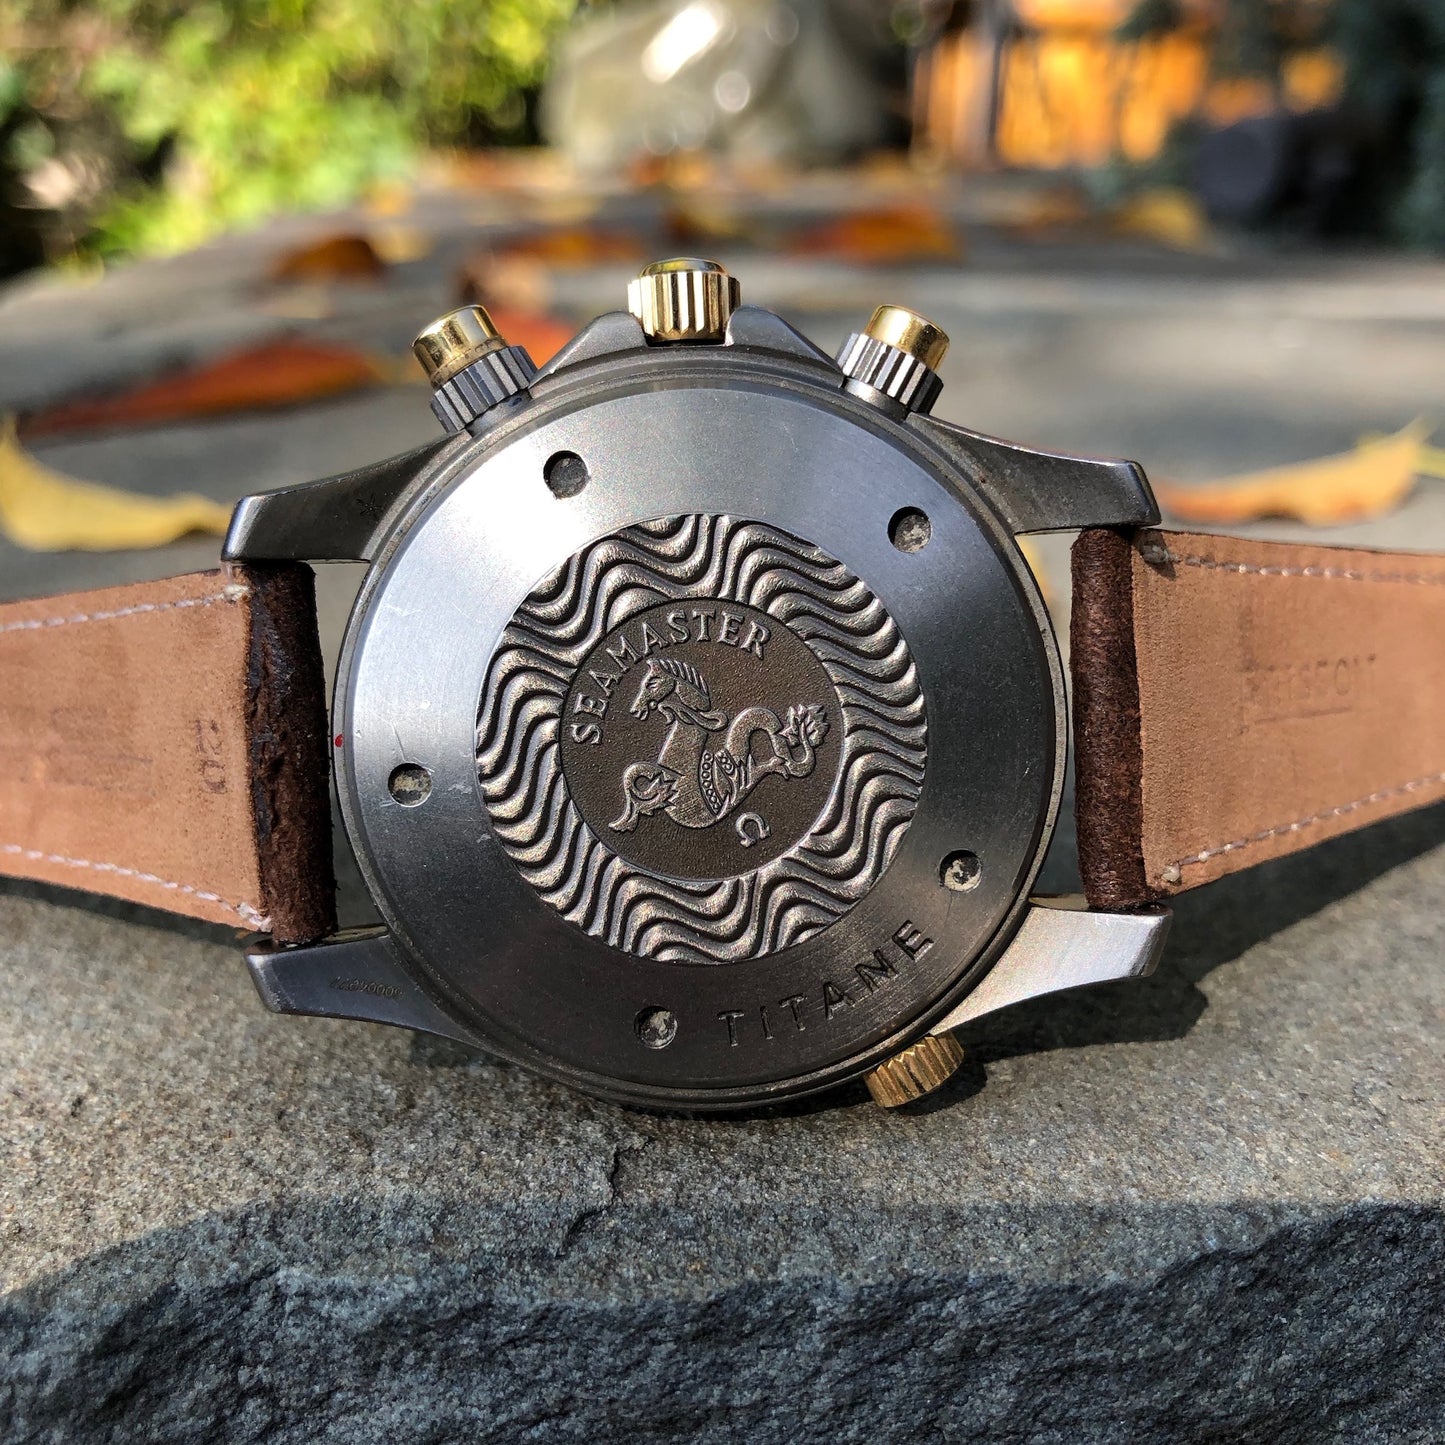 Omega Seamaster Professional 300M 2296.80 Titanium Chronograph Gold Bezel Automatic Wristwatch - Hashtag Watch Company